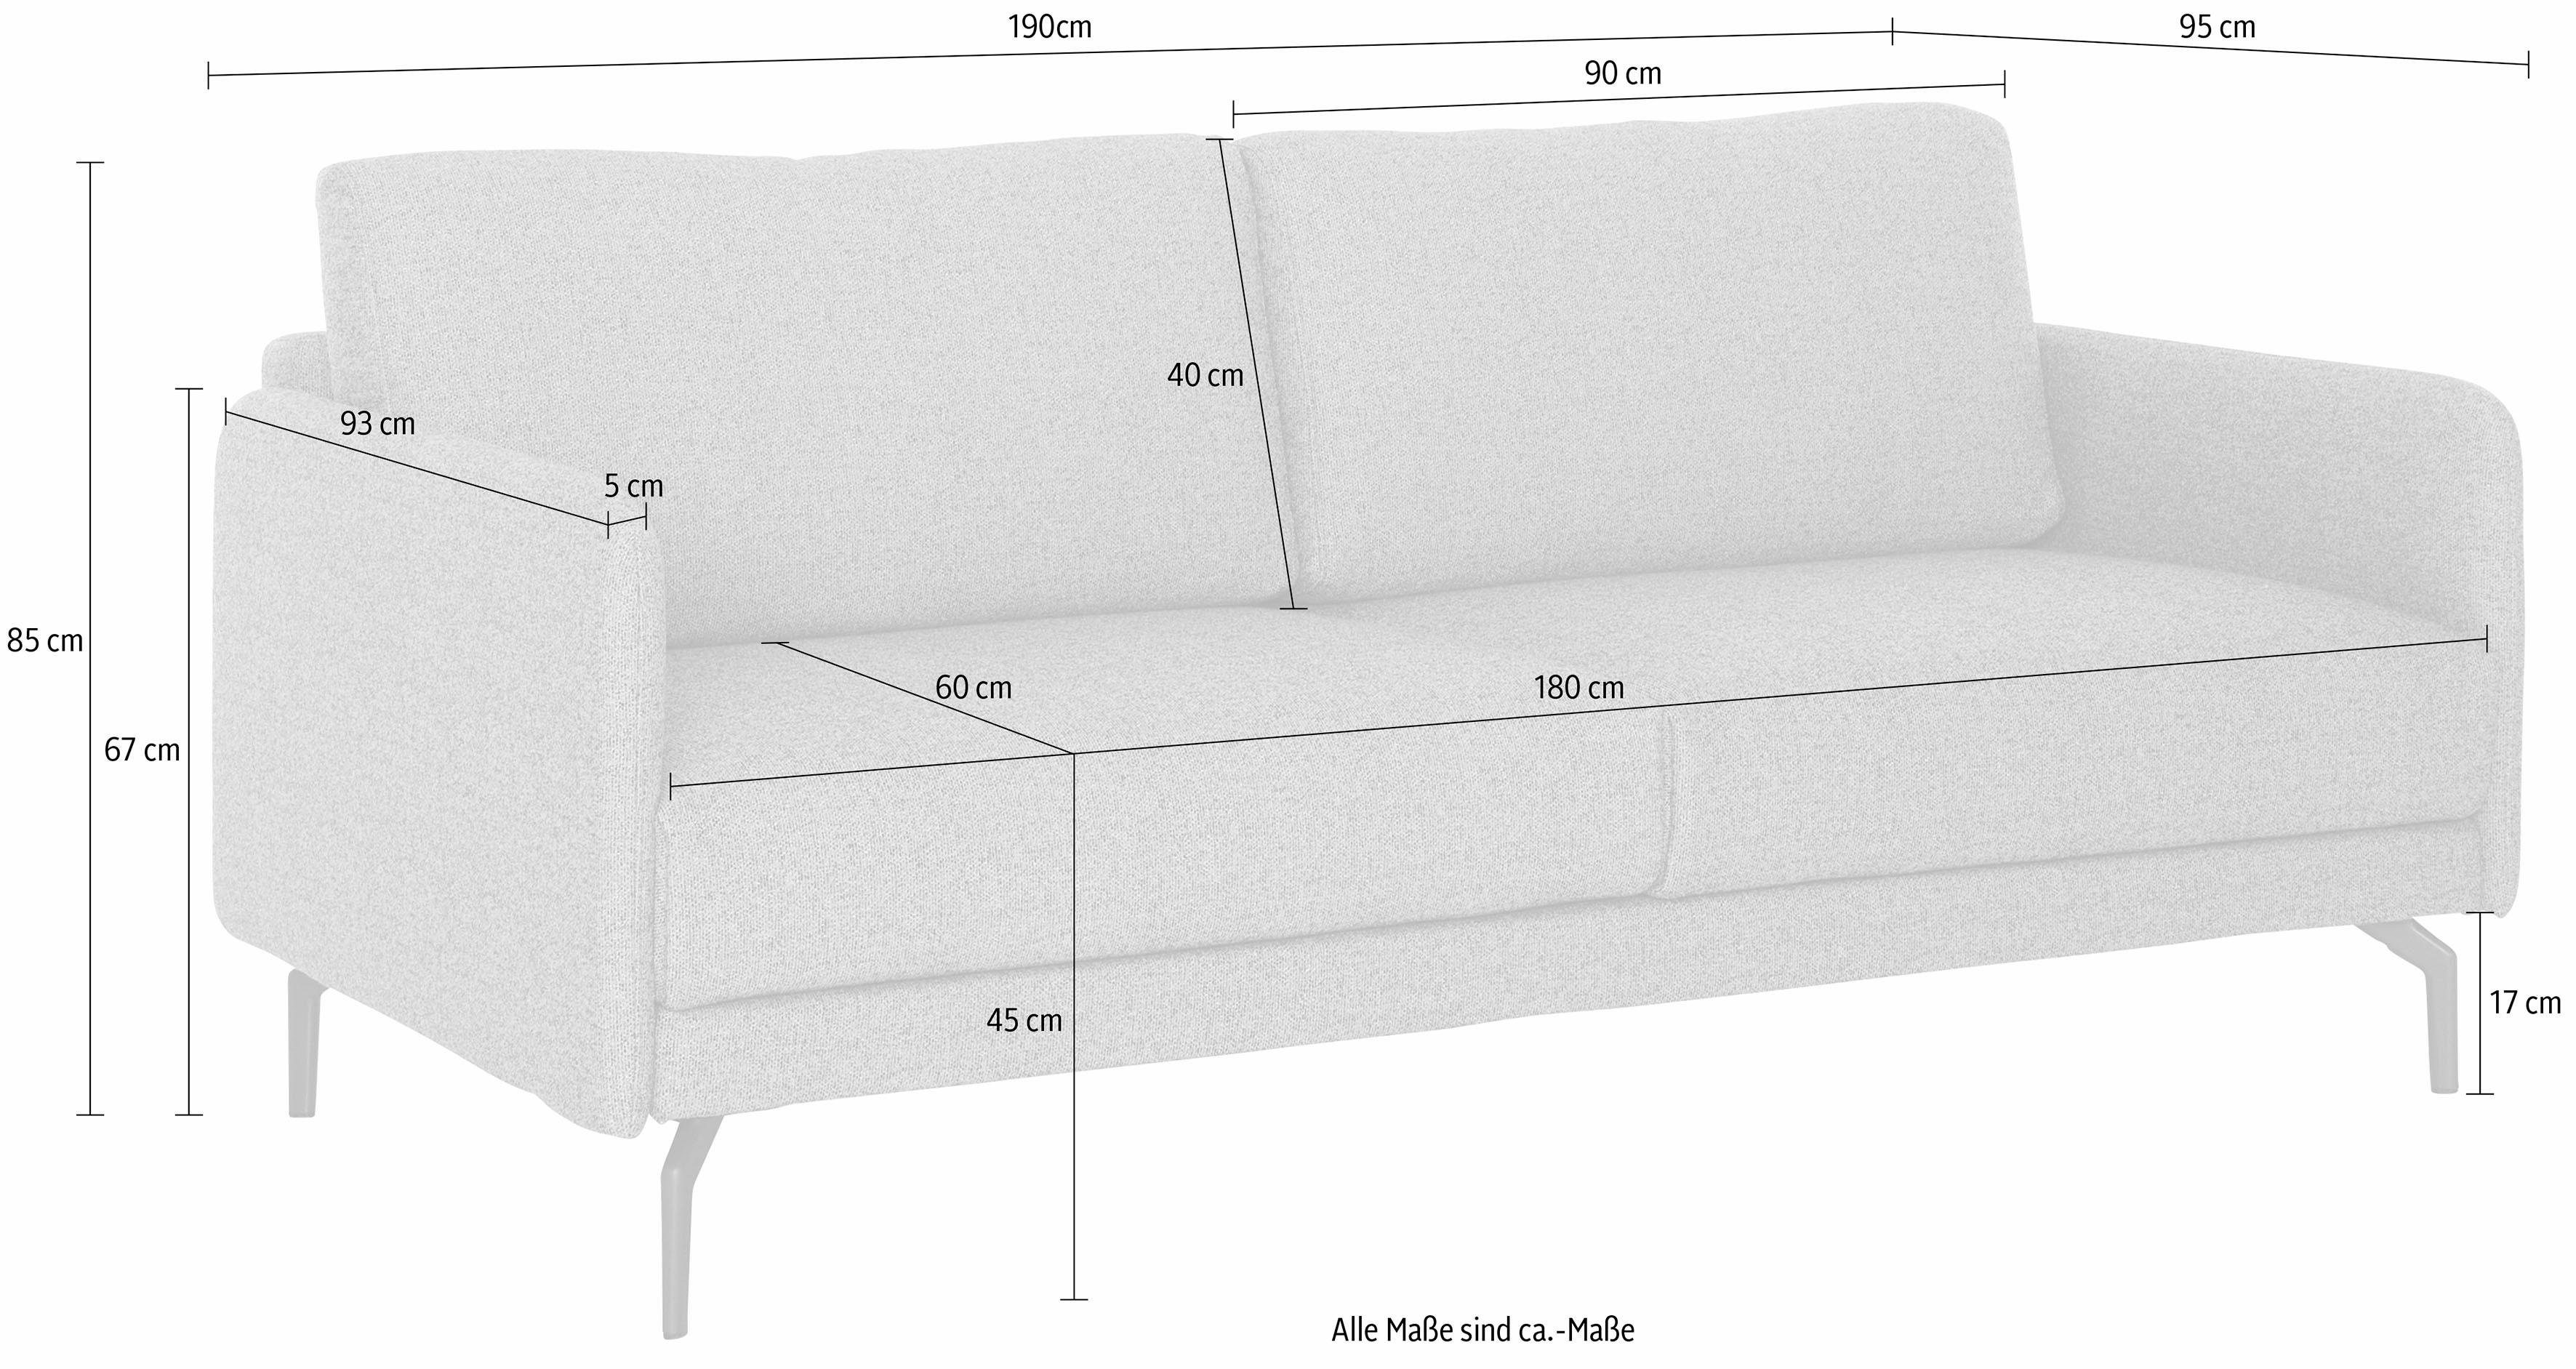 Armlehne Alugussfuß sehr Breite schmal, 3-Sitzer 190 hülsta sofa Umbragrau hs.450, cm,